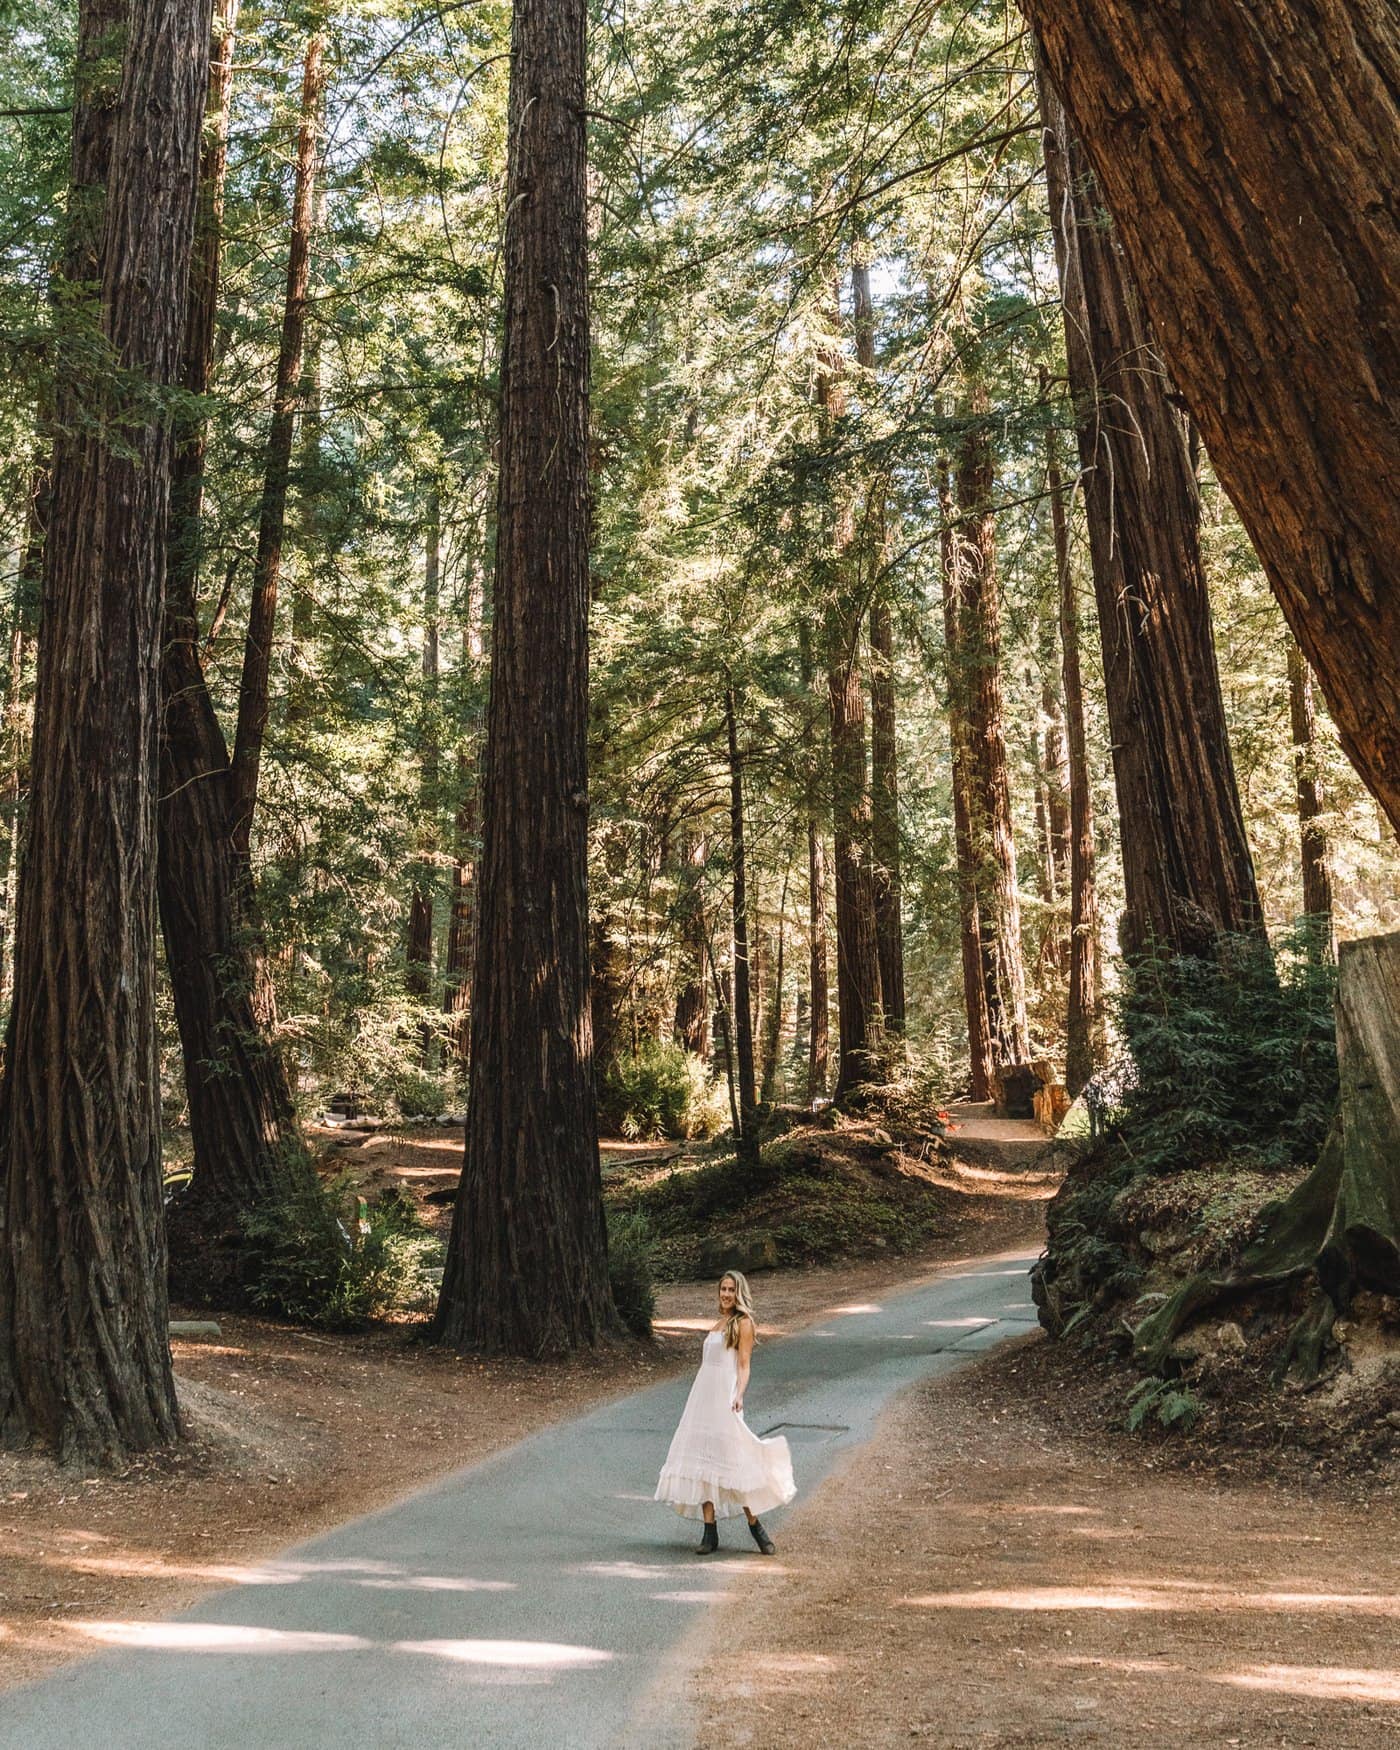 Michelle Halpern amongst the California redwood trees